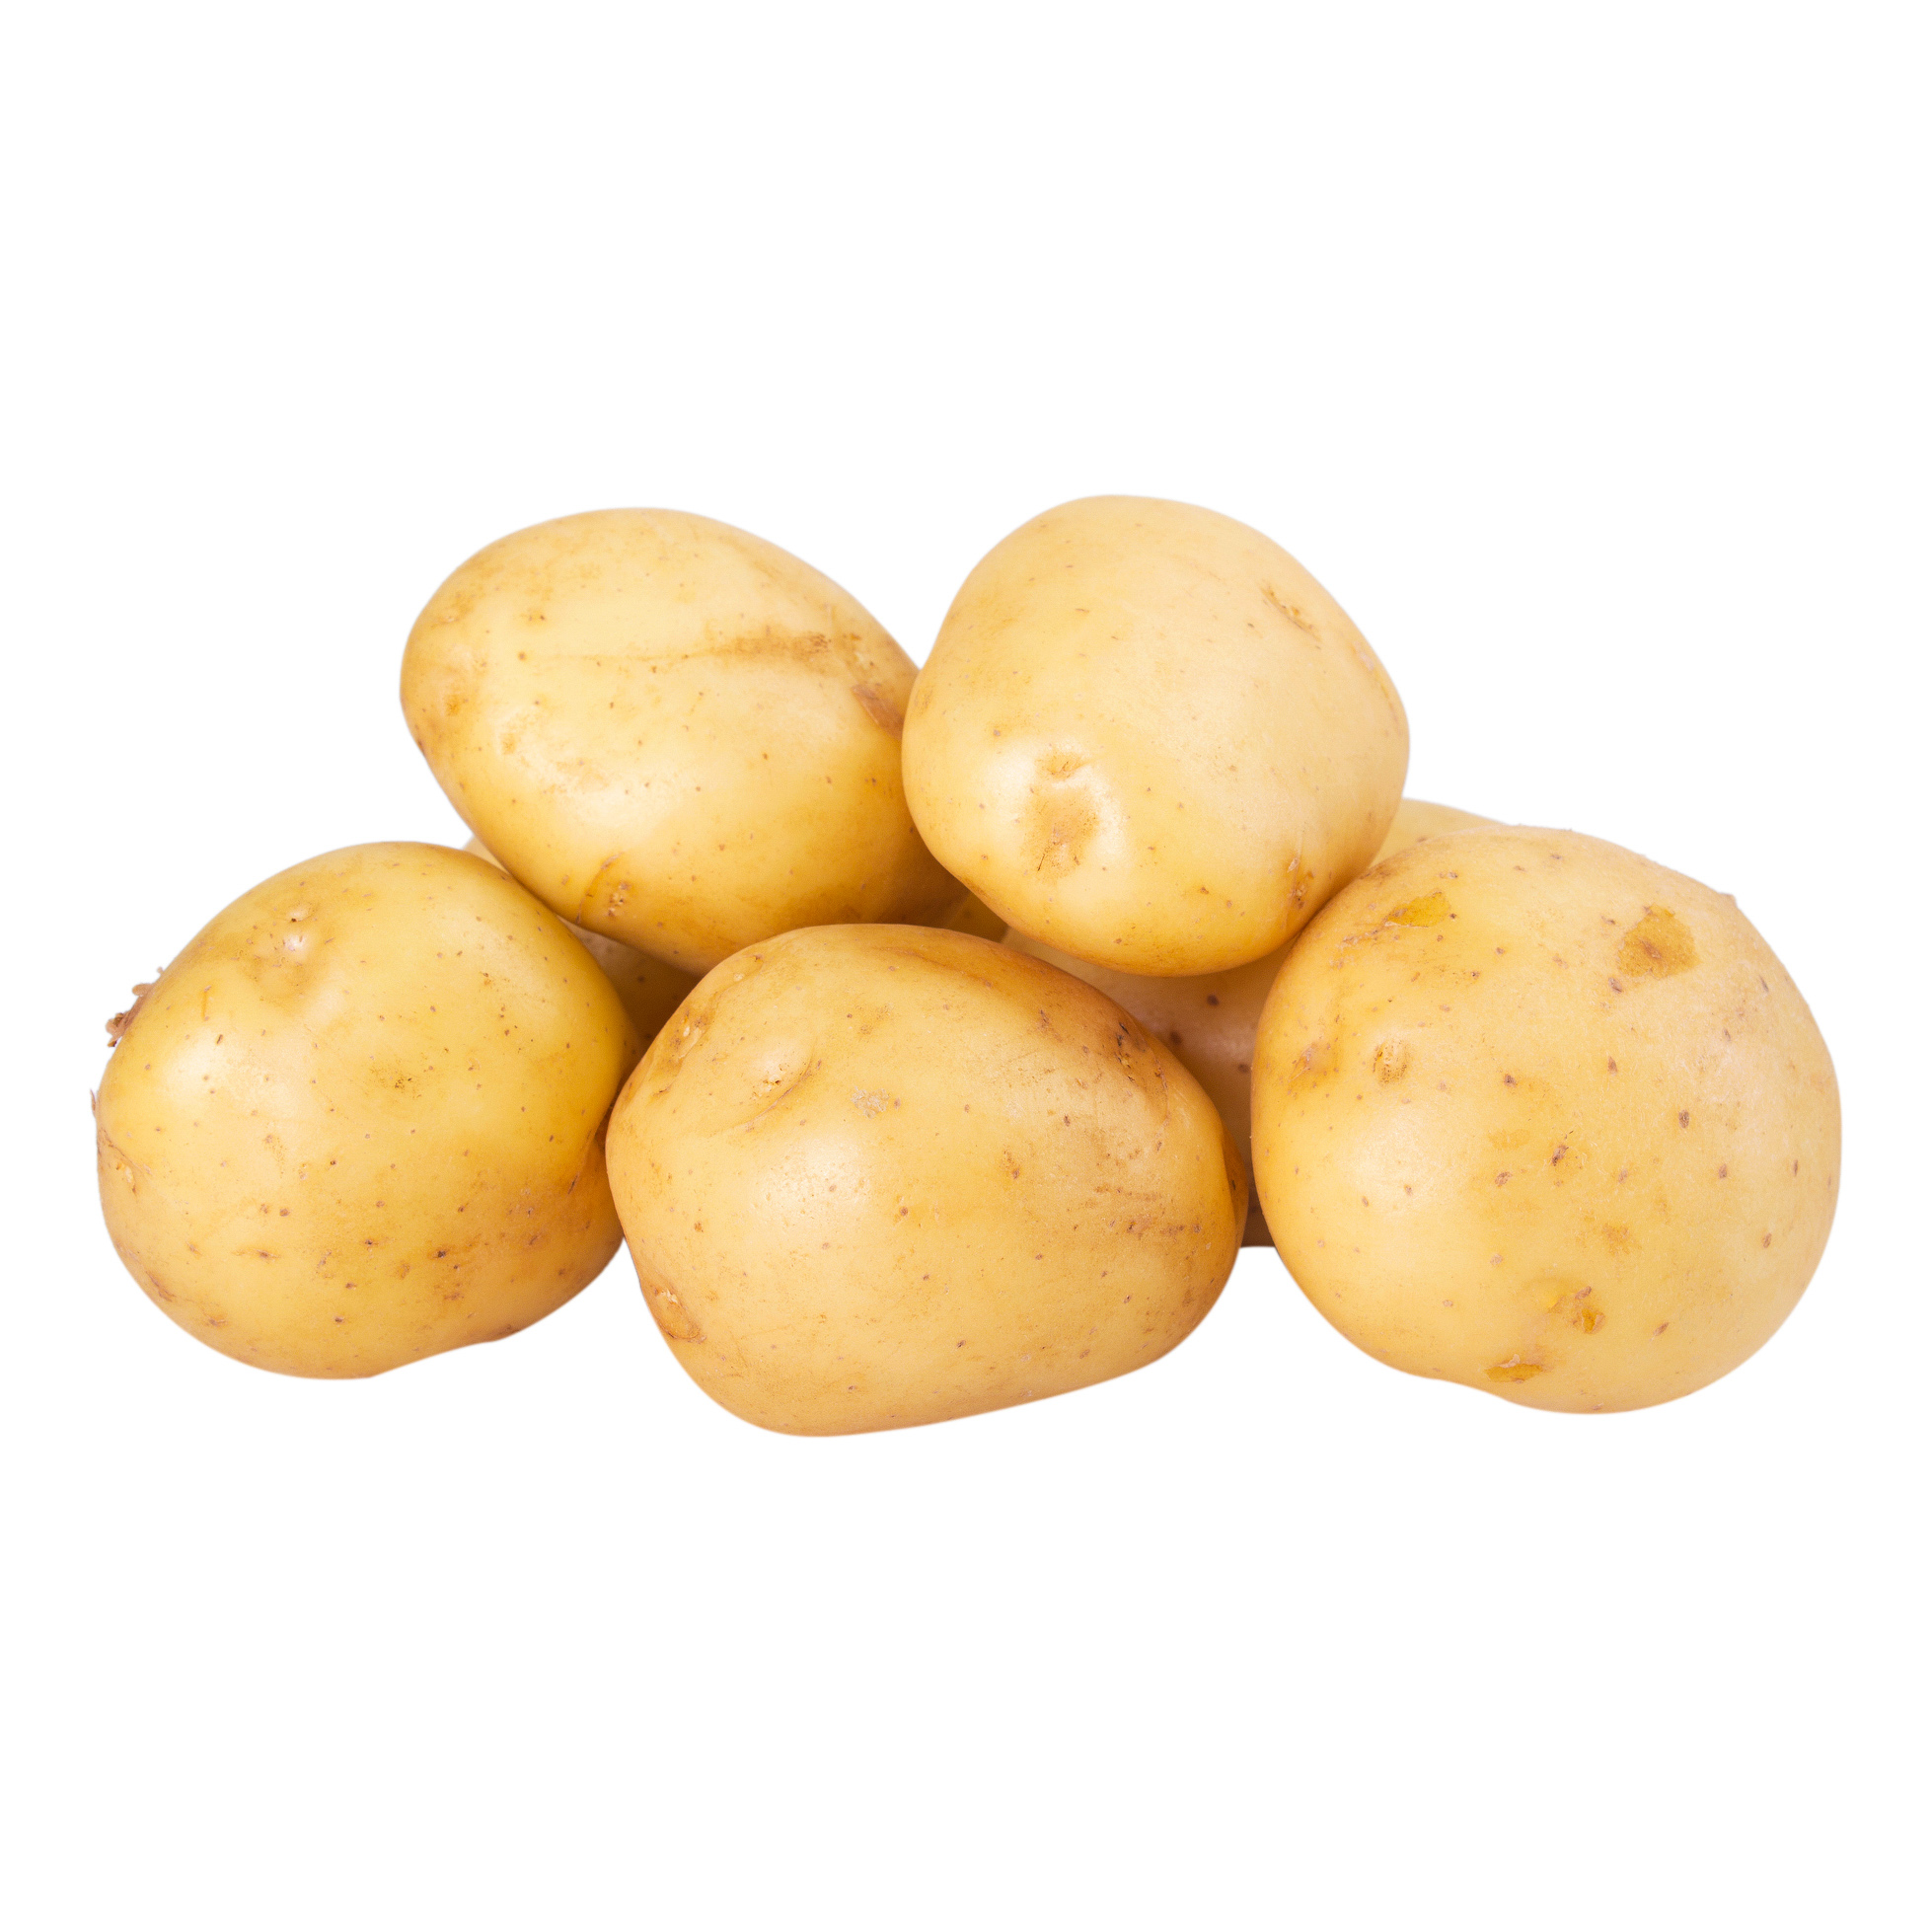 сорокодневка сорт картофеля фото